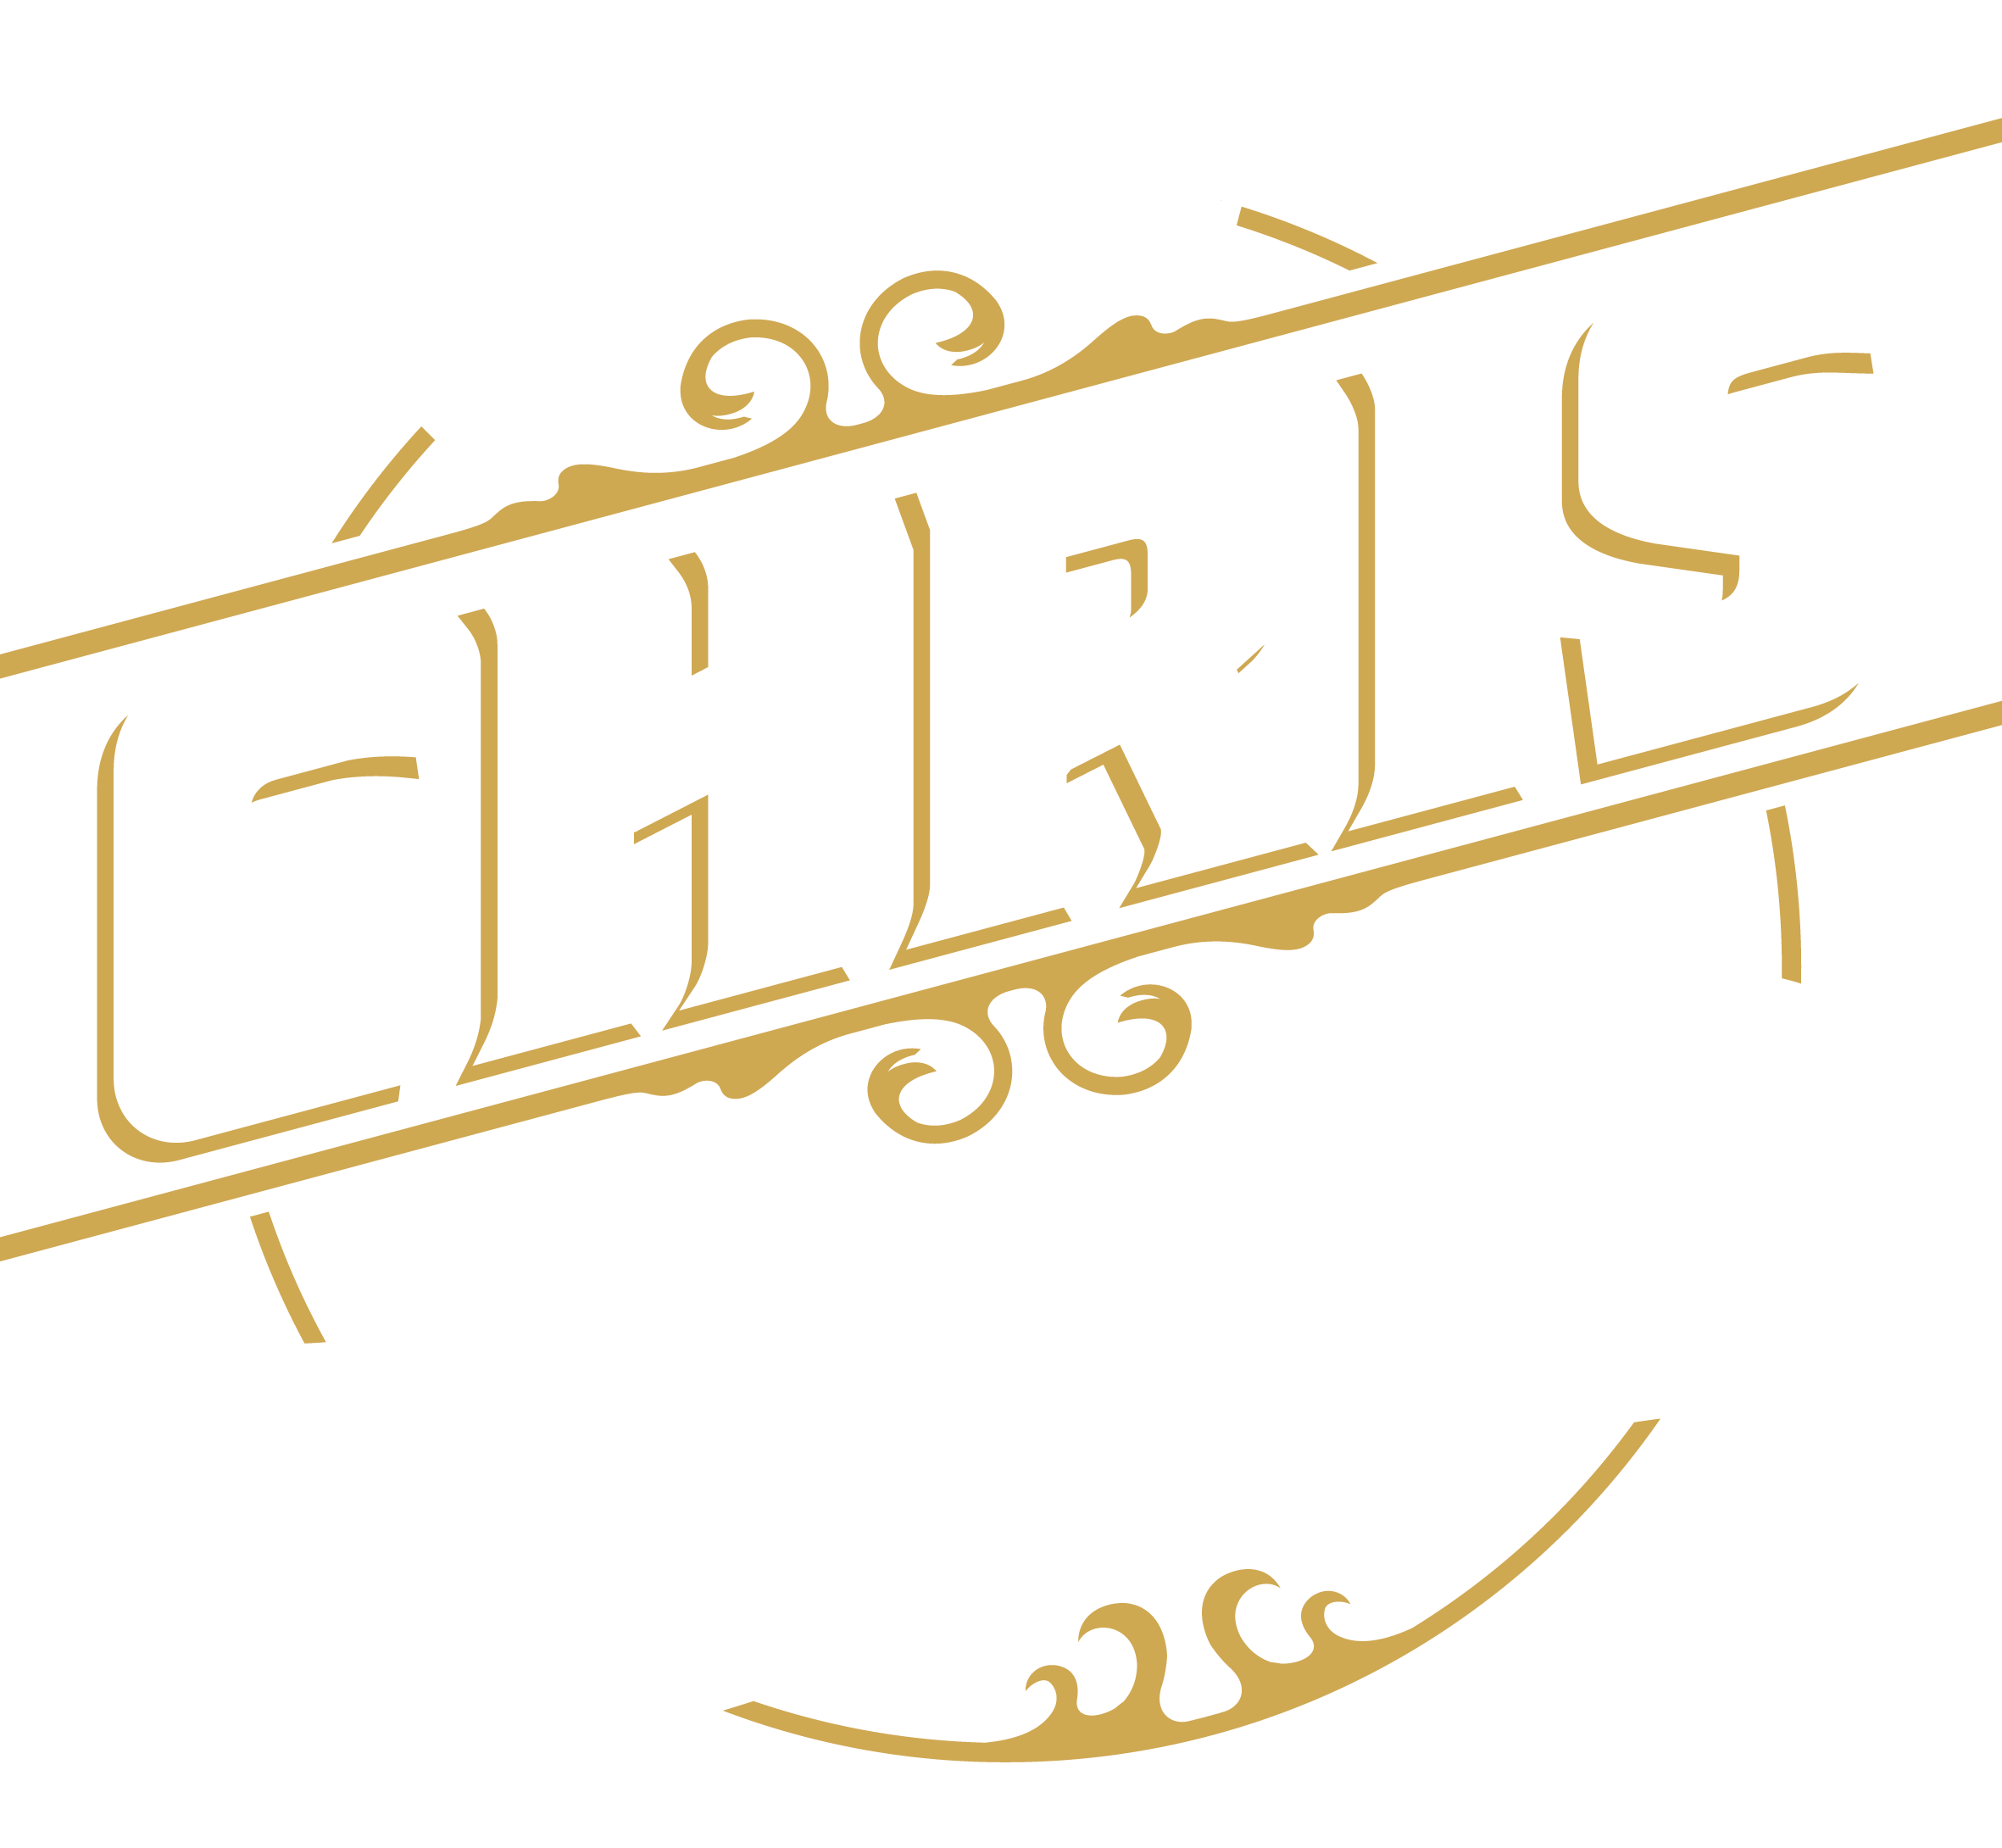 Chris Darlington